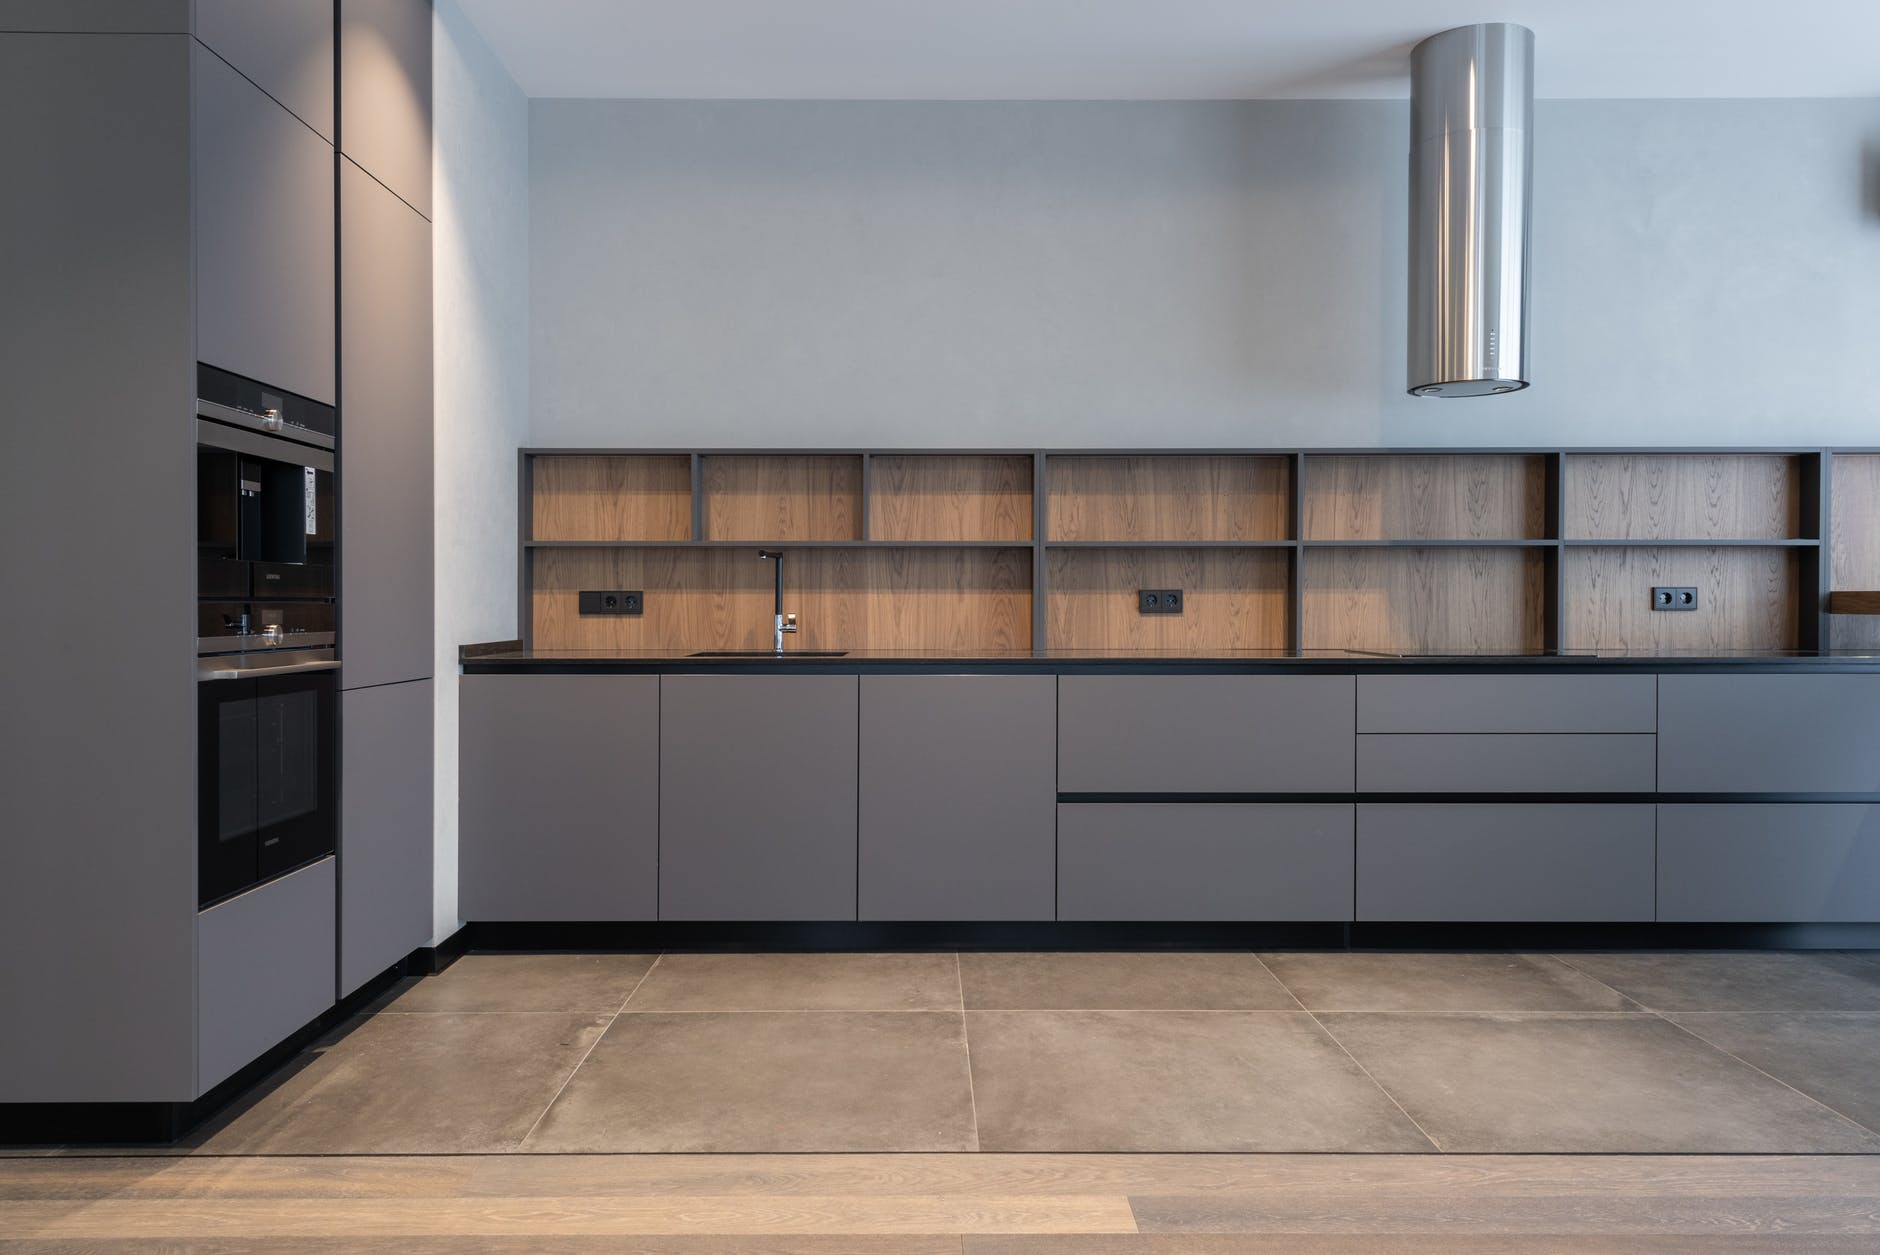 Ventilator spacious kitchen in modern apartment